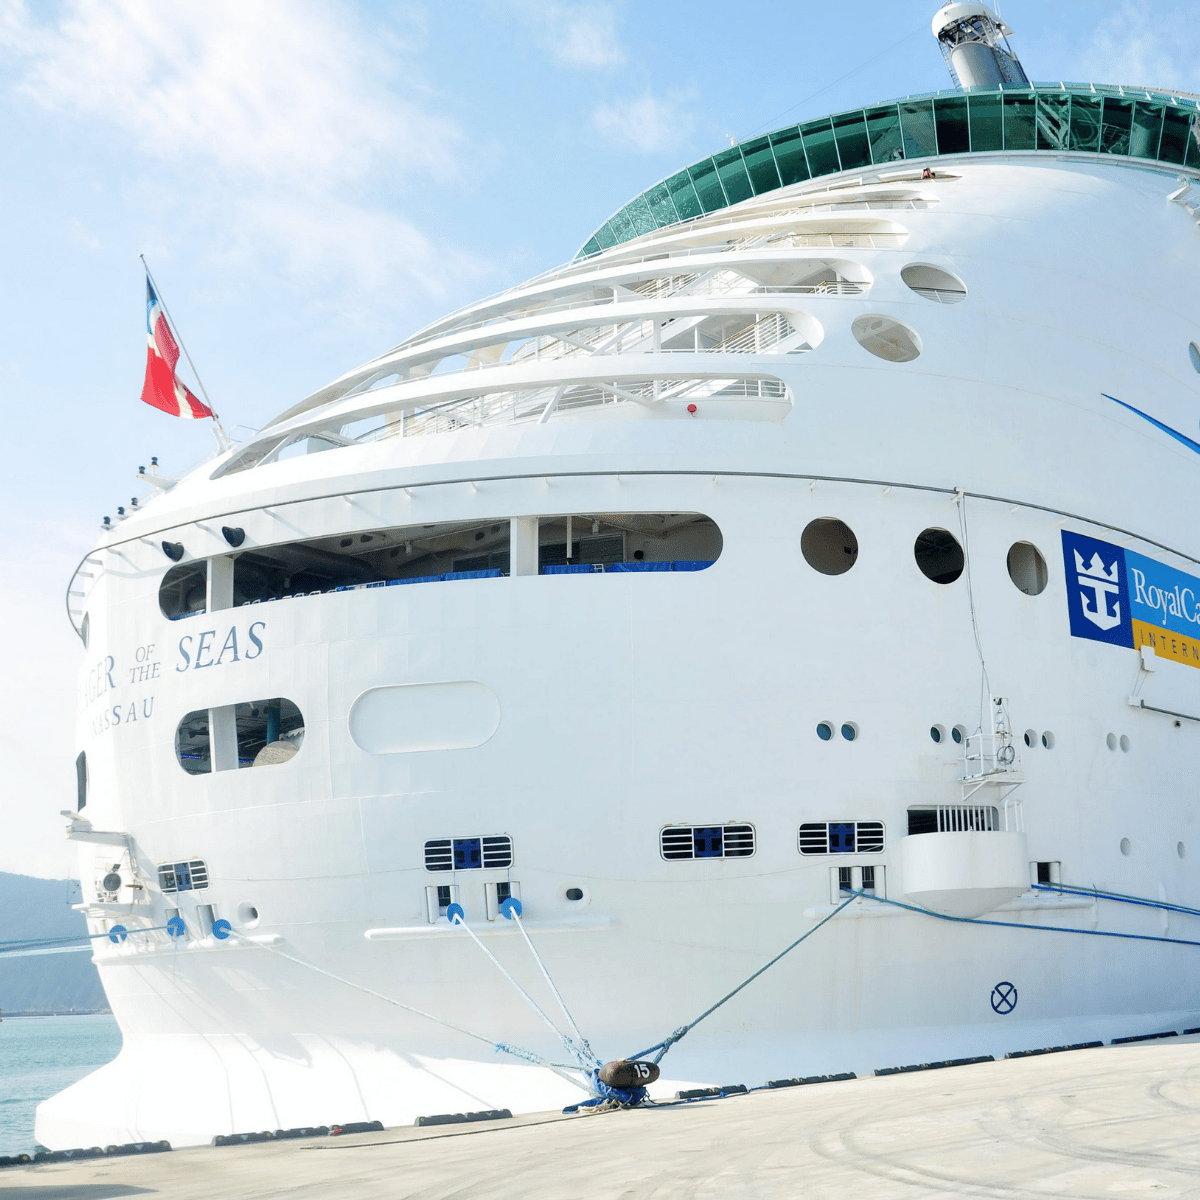 Voyager of the Seas - Royal Caribbean Cruise Ships